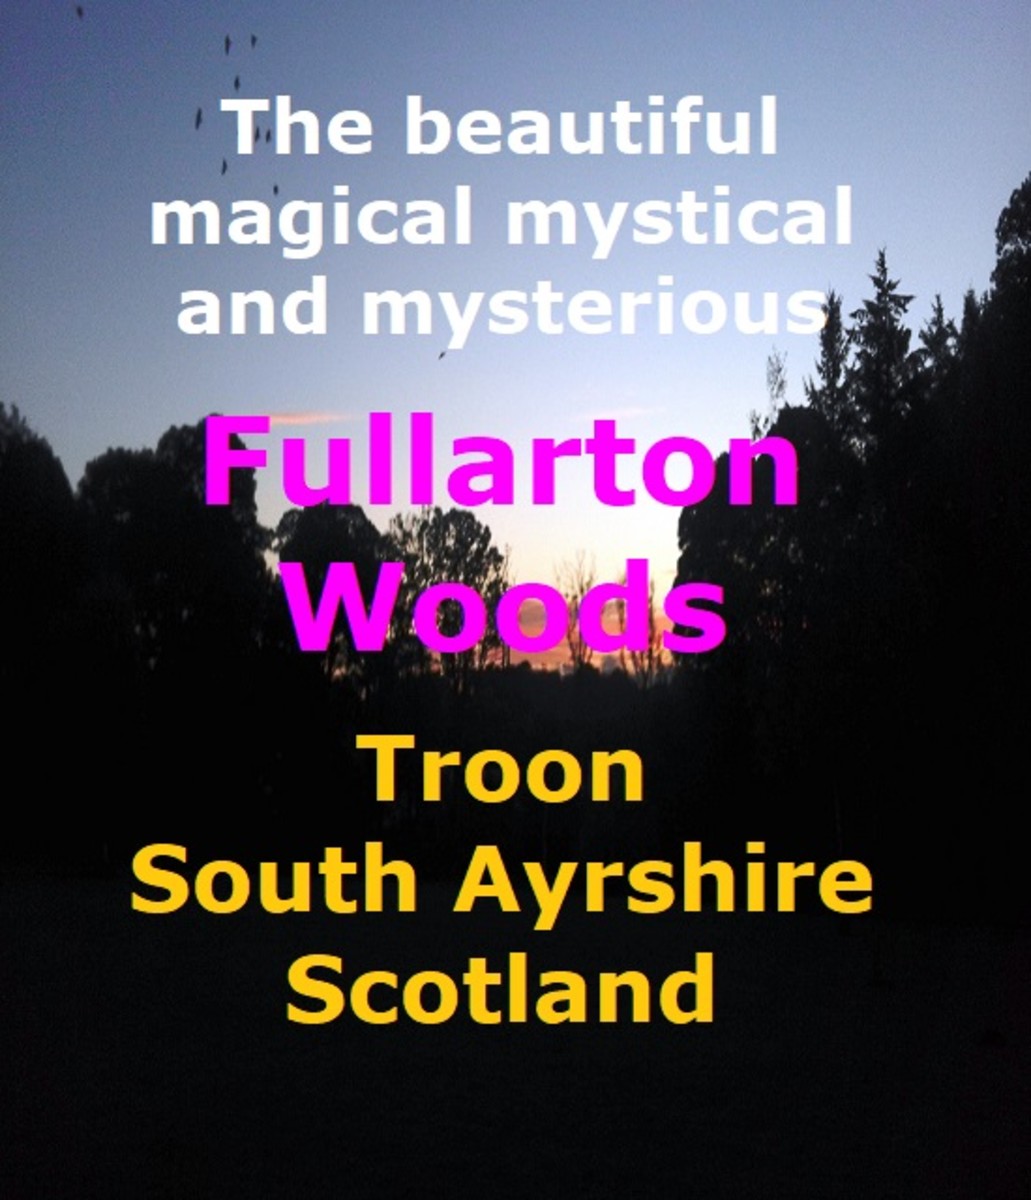 fullarton-woods-troon-south-ayrshire-scotland